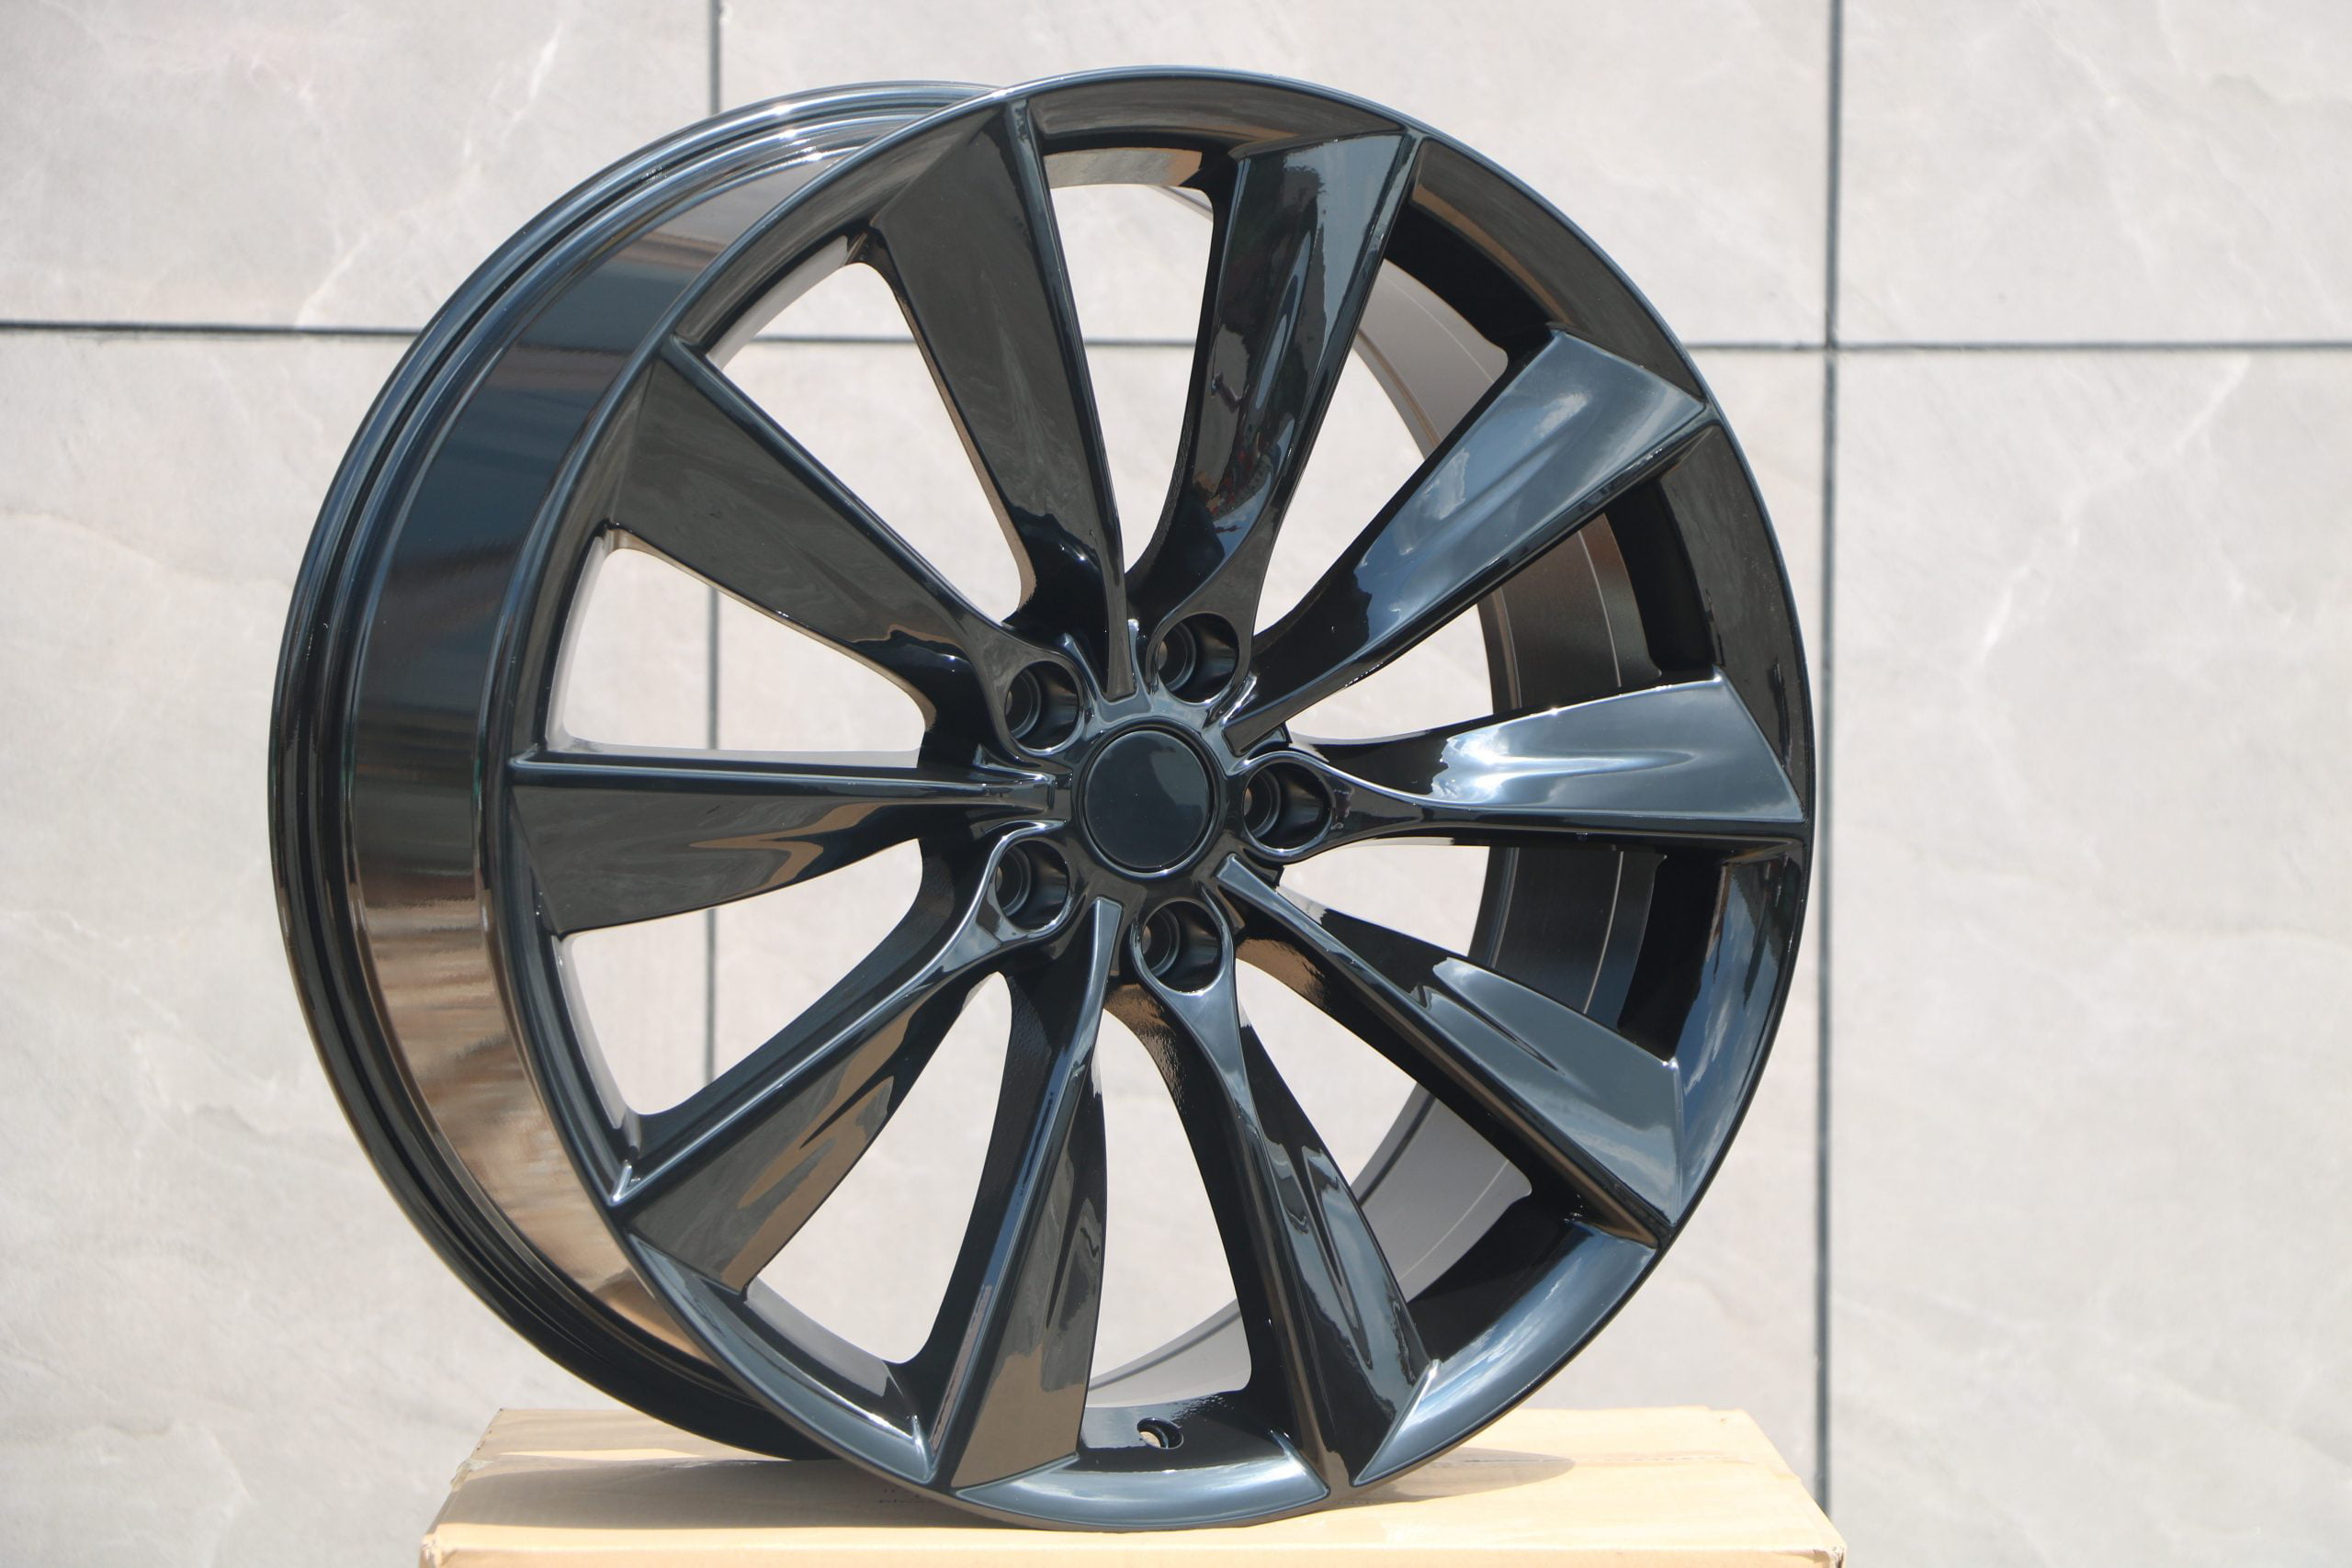 New 22 X 9 Gloss Black Alloy Wheels Fits Tesla Model X 15 21 5 X 1 Et 35 Set Of 4 Walmart Com